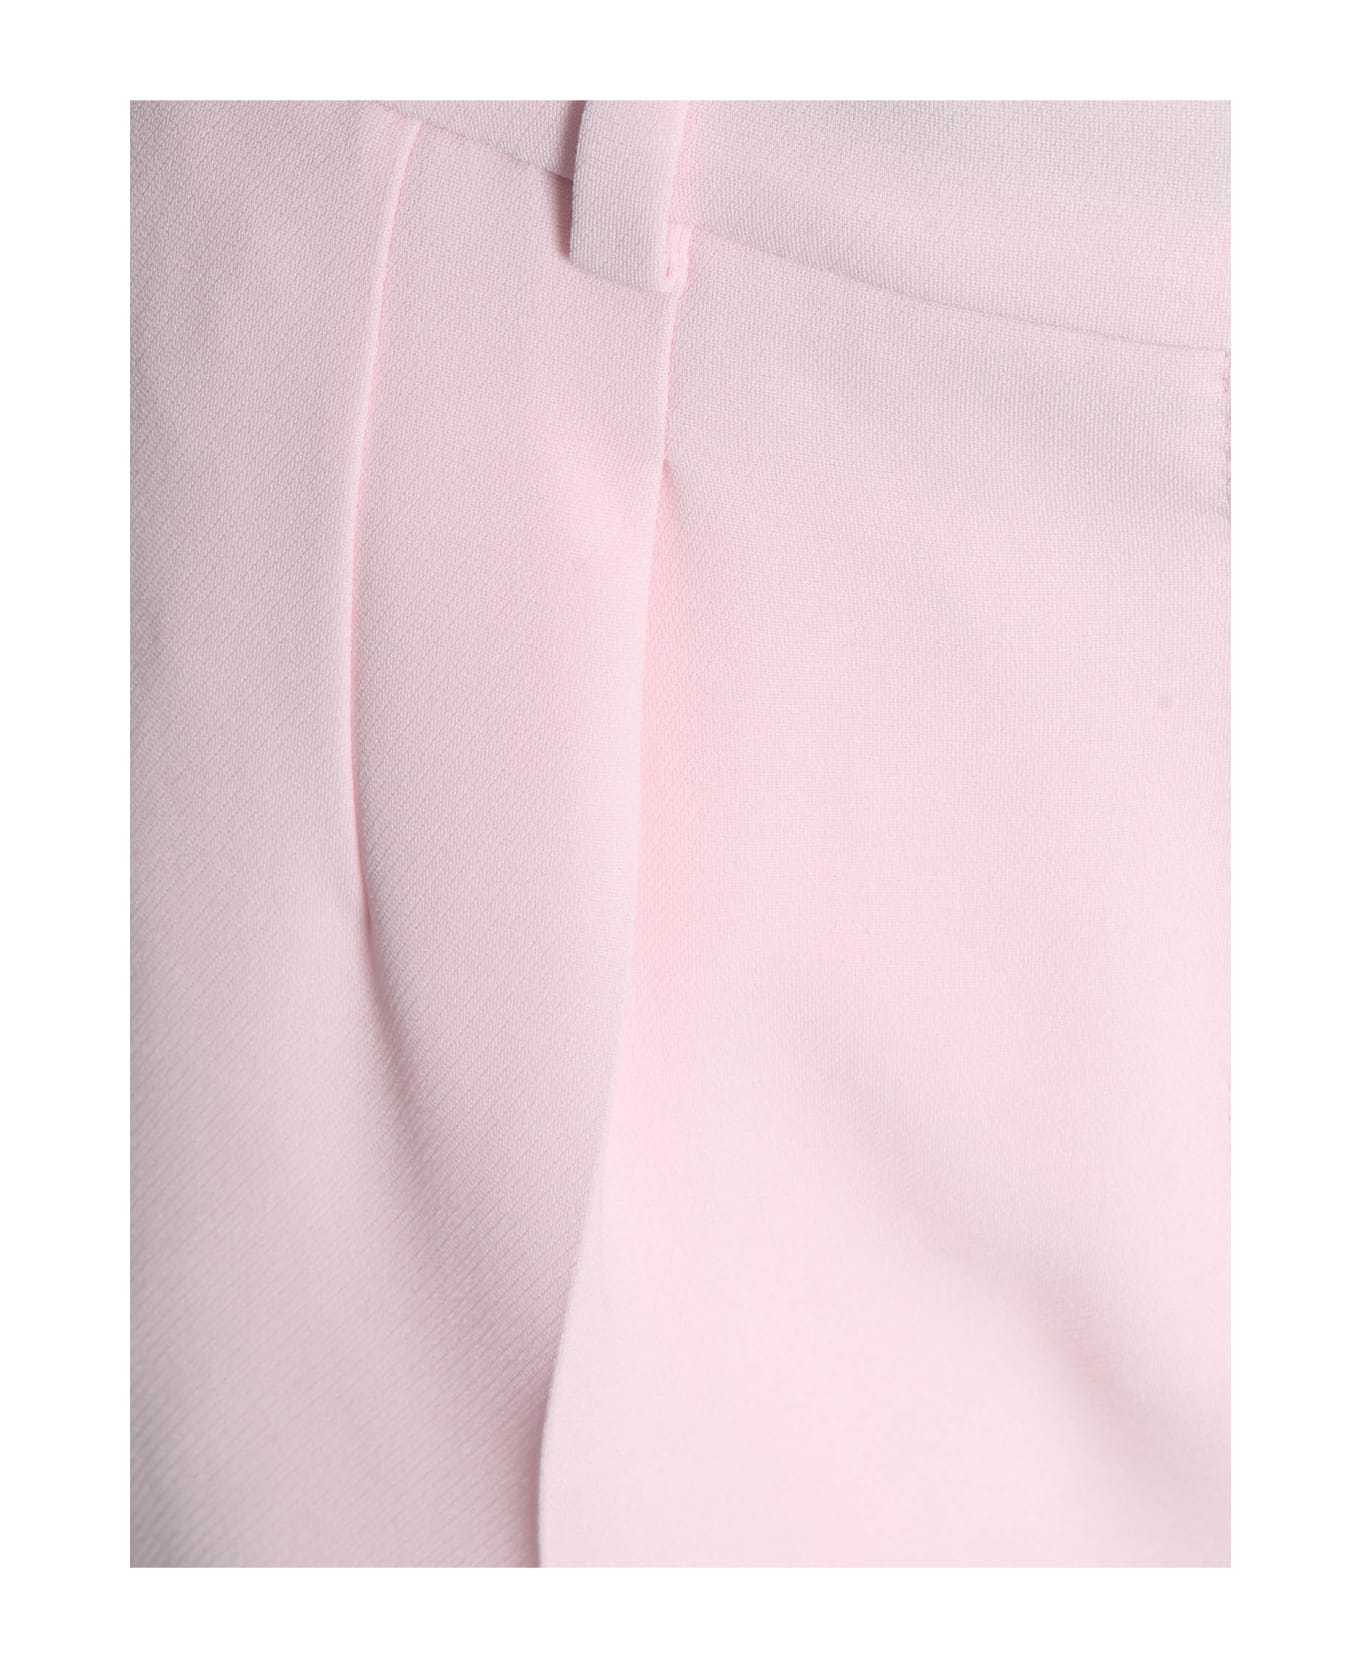 Max Mara Studio Pink Era Trousers - PINK